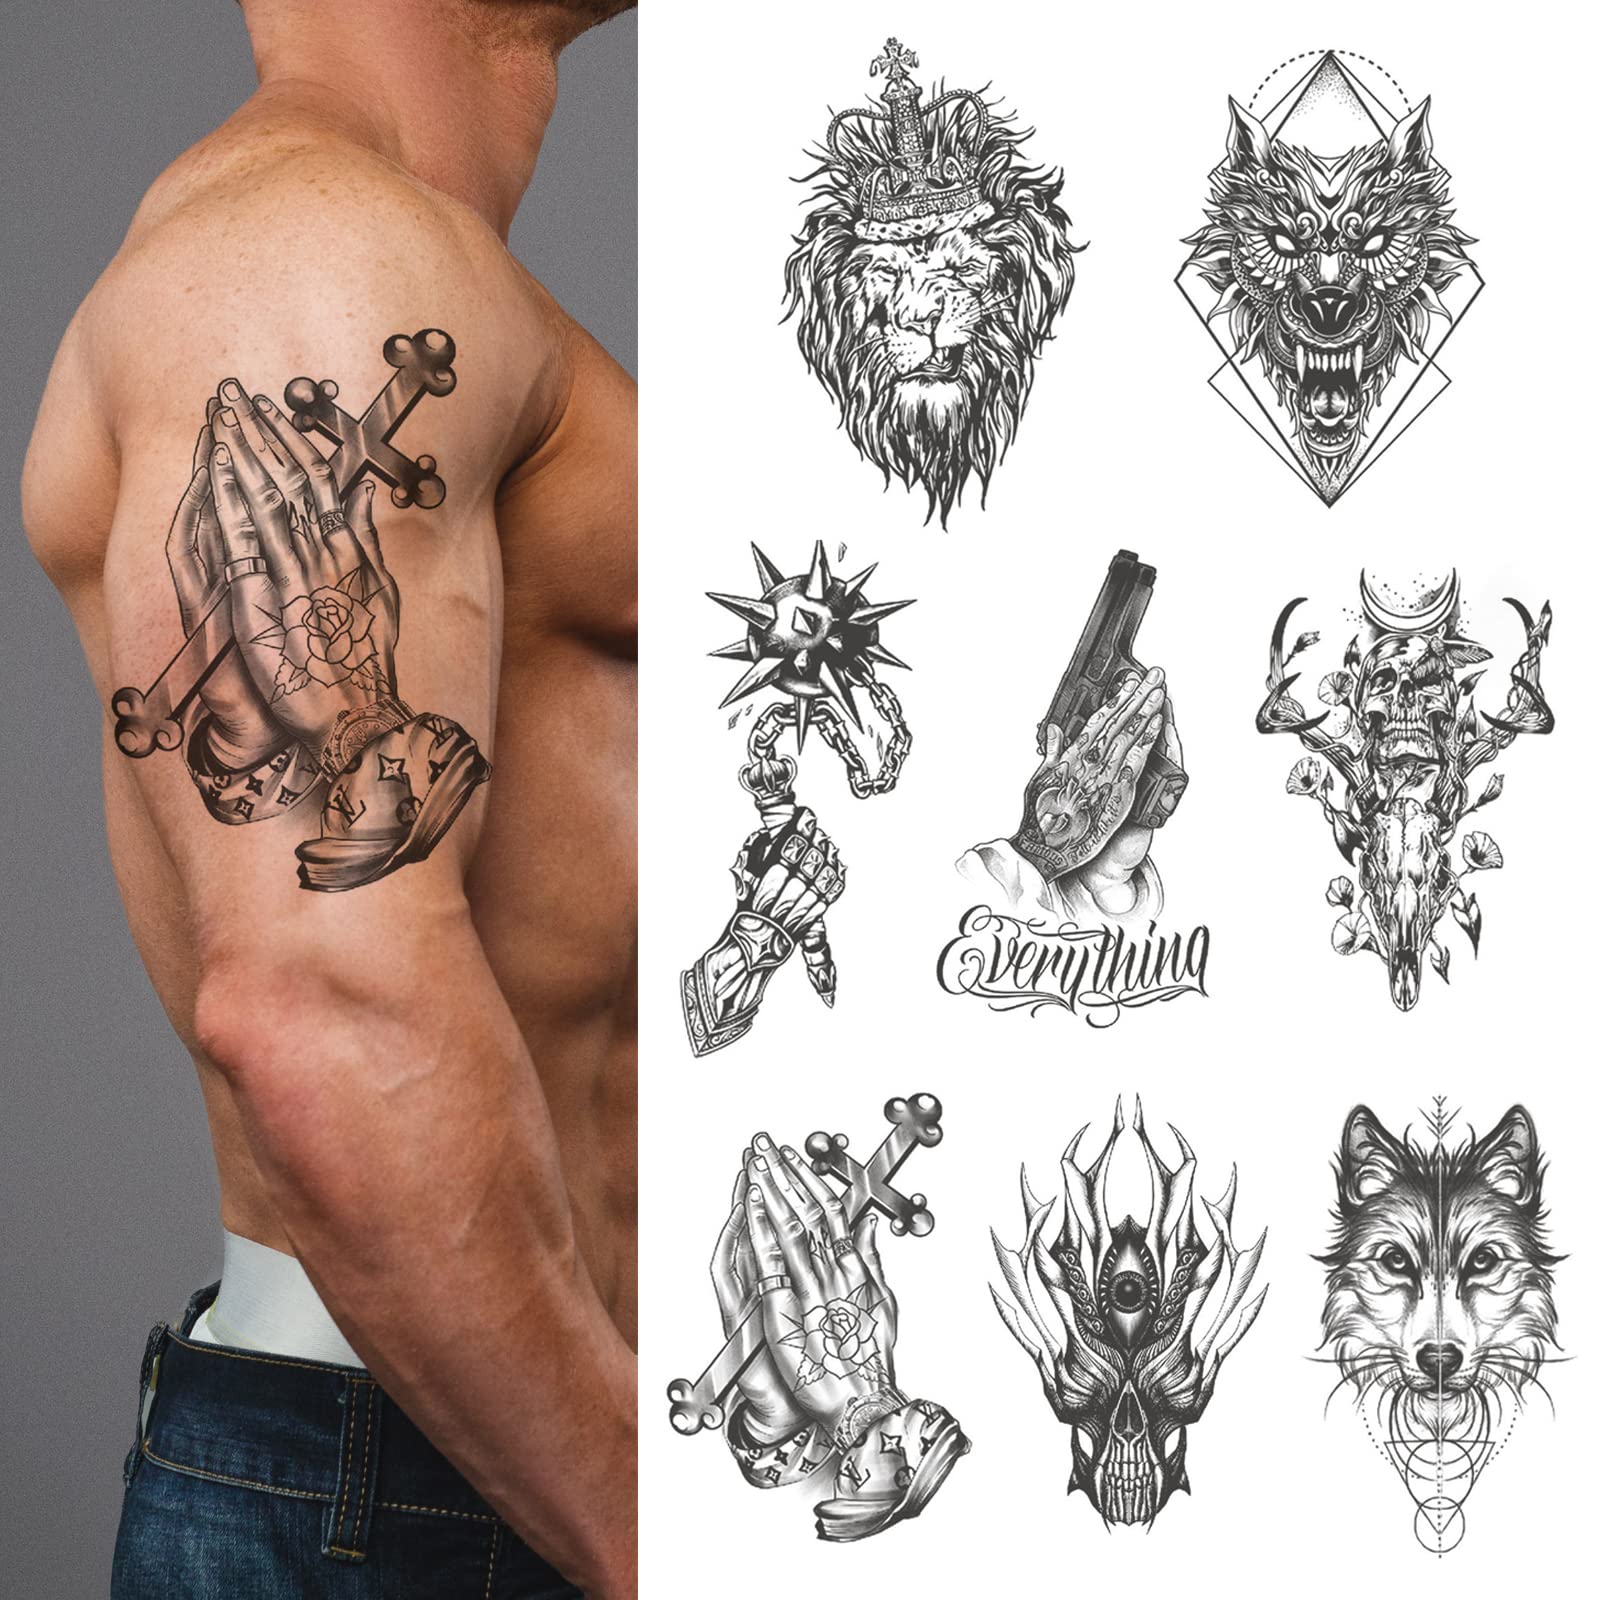 Black Flower Temporary Tattoos Stickers Arm Sleeve Butterfly Snake Body Art  DIY | eBay